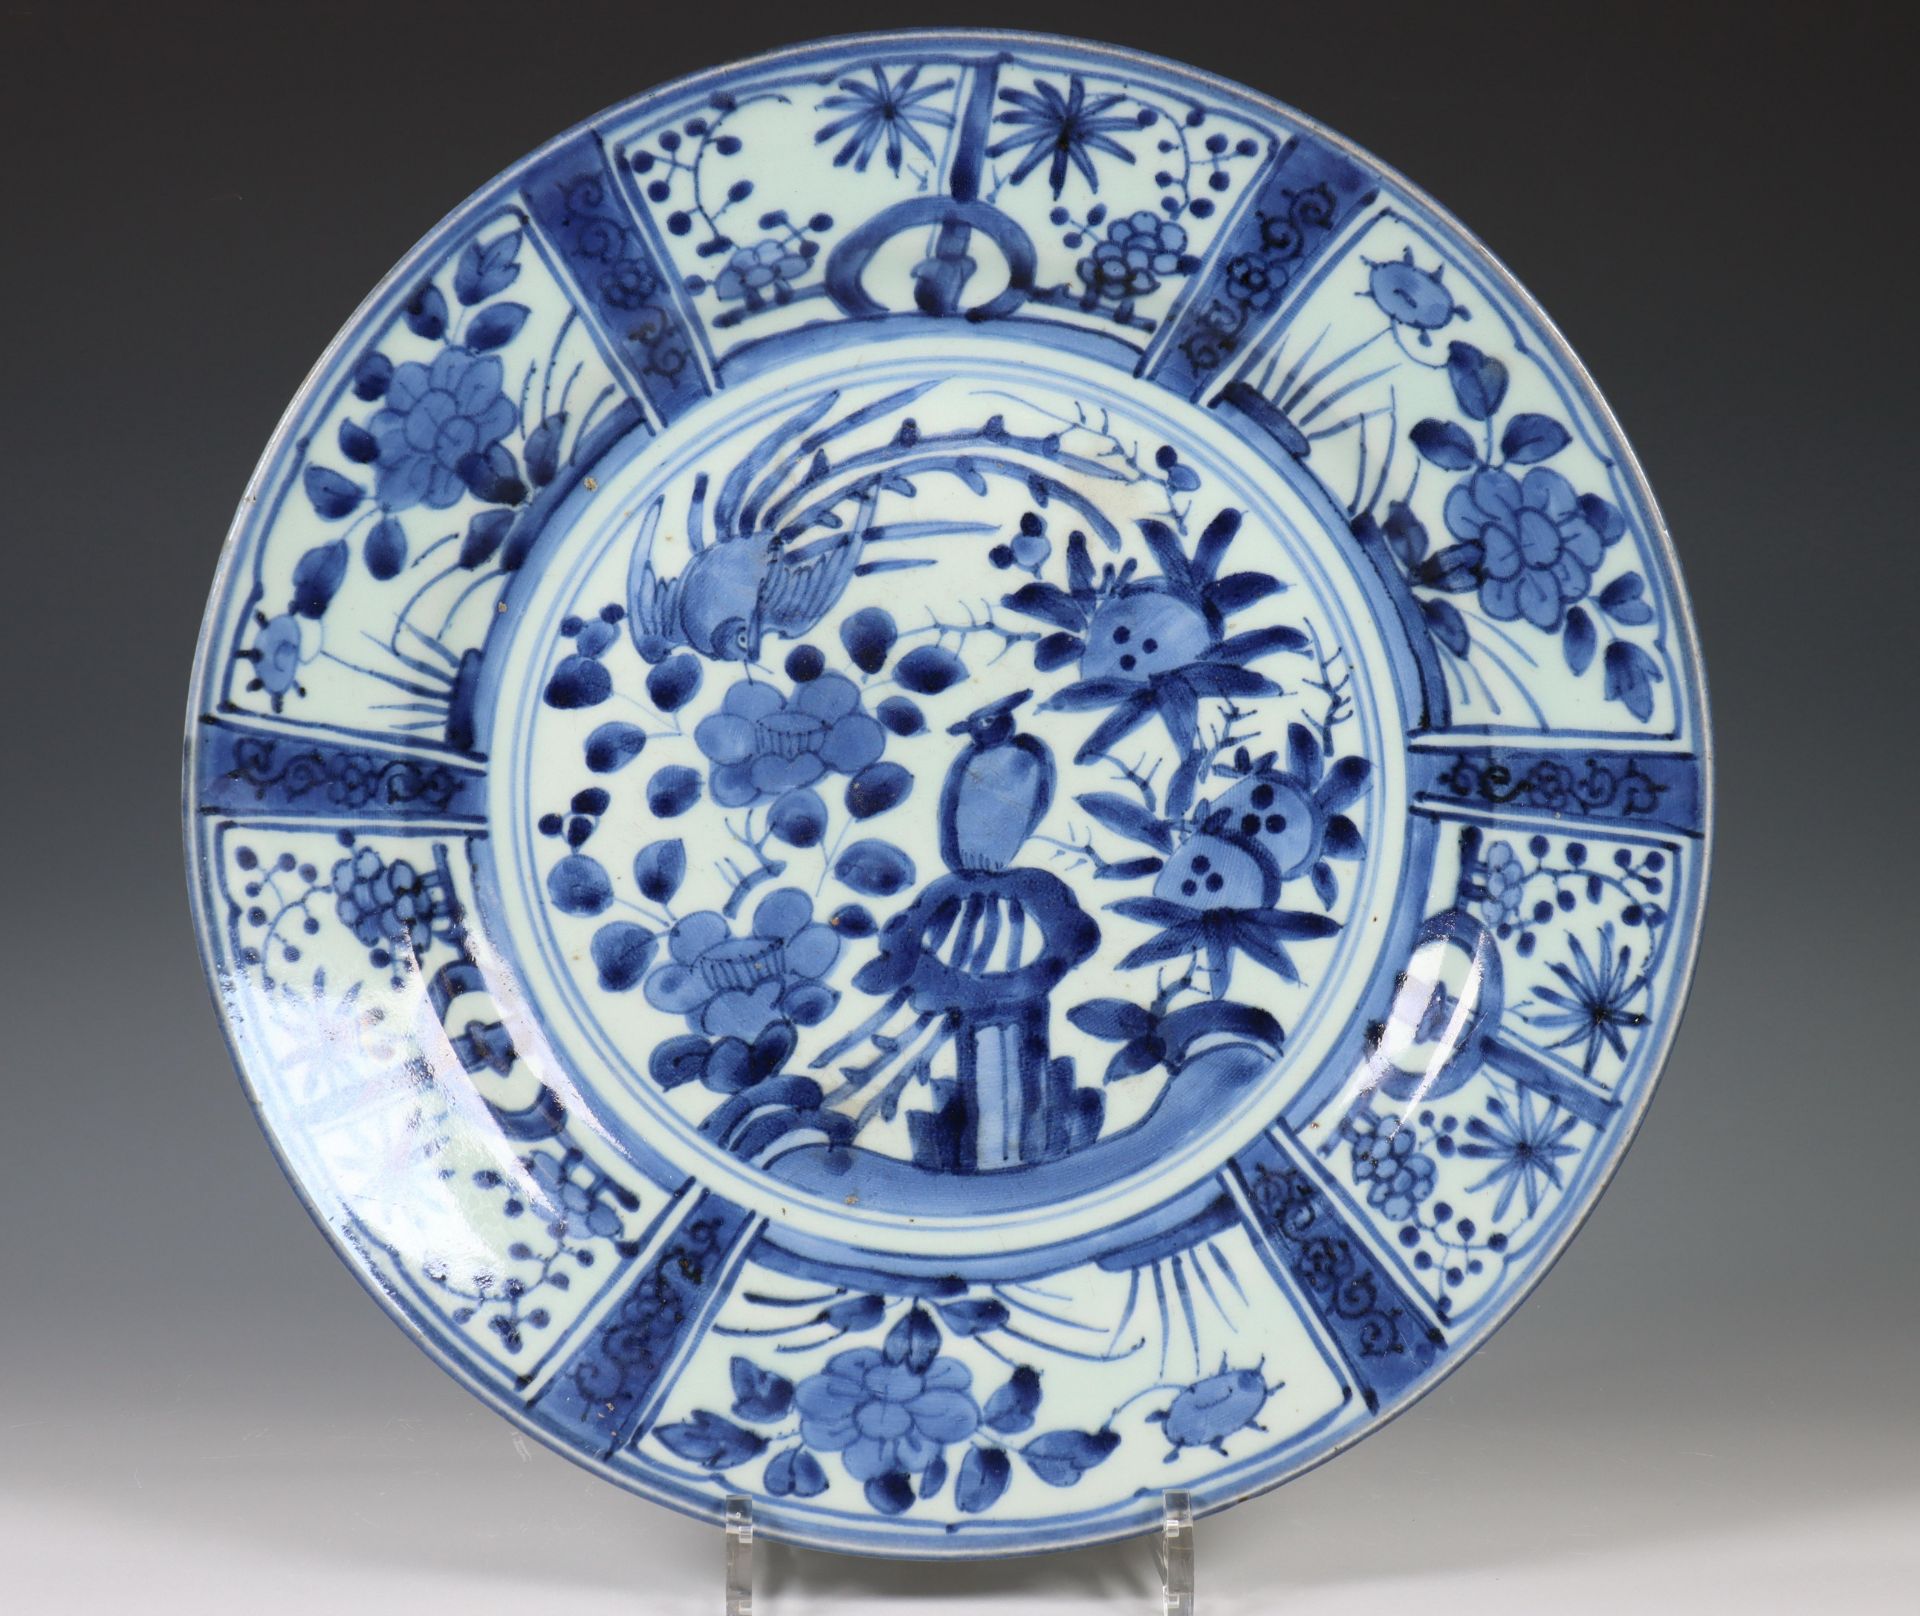 Japan, Arita blue and white porcelain 'Kraak style' dish, Edo period, late 17th century, decorated